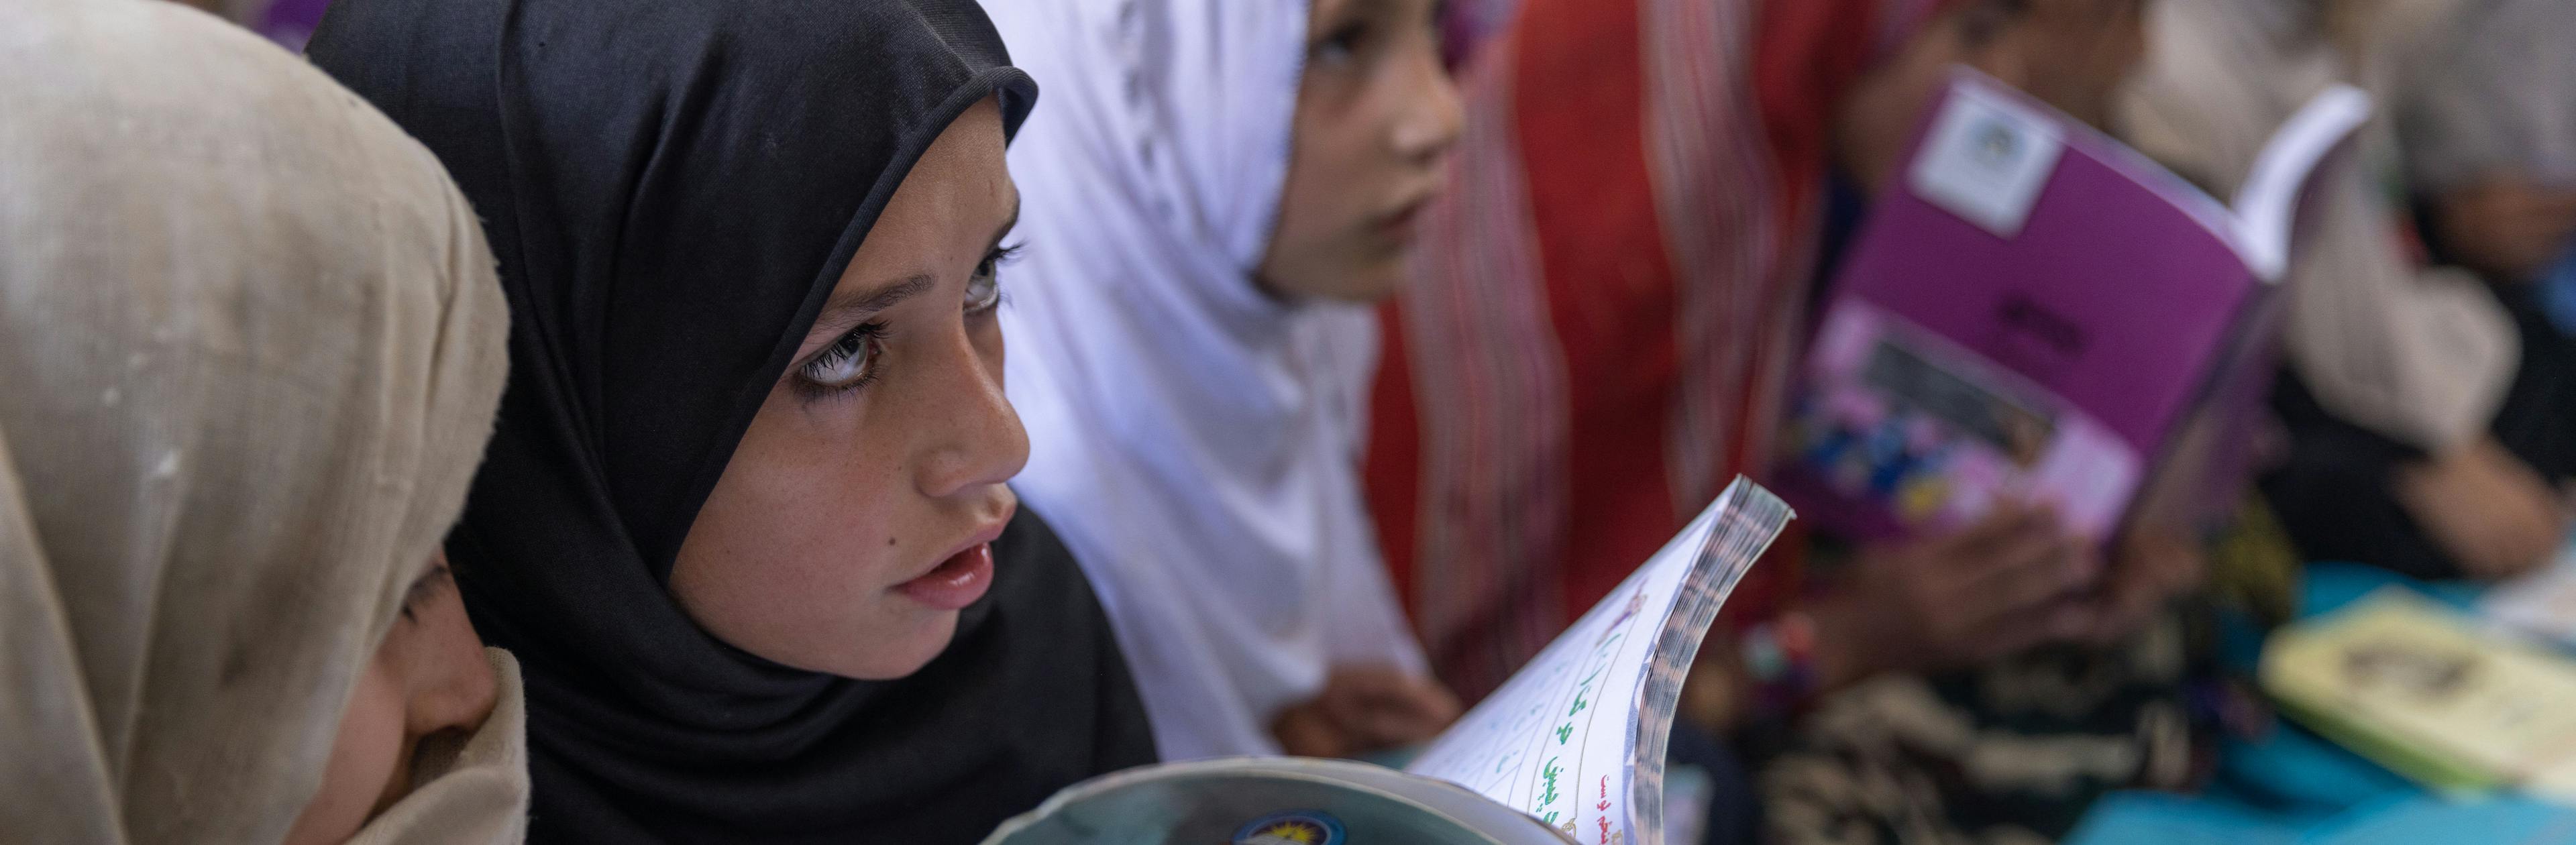 Inside her new classroom, Gulaba, 9, studies from her textbook alongside her classmates.